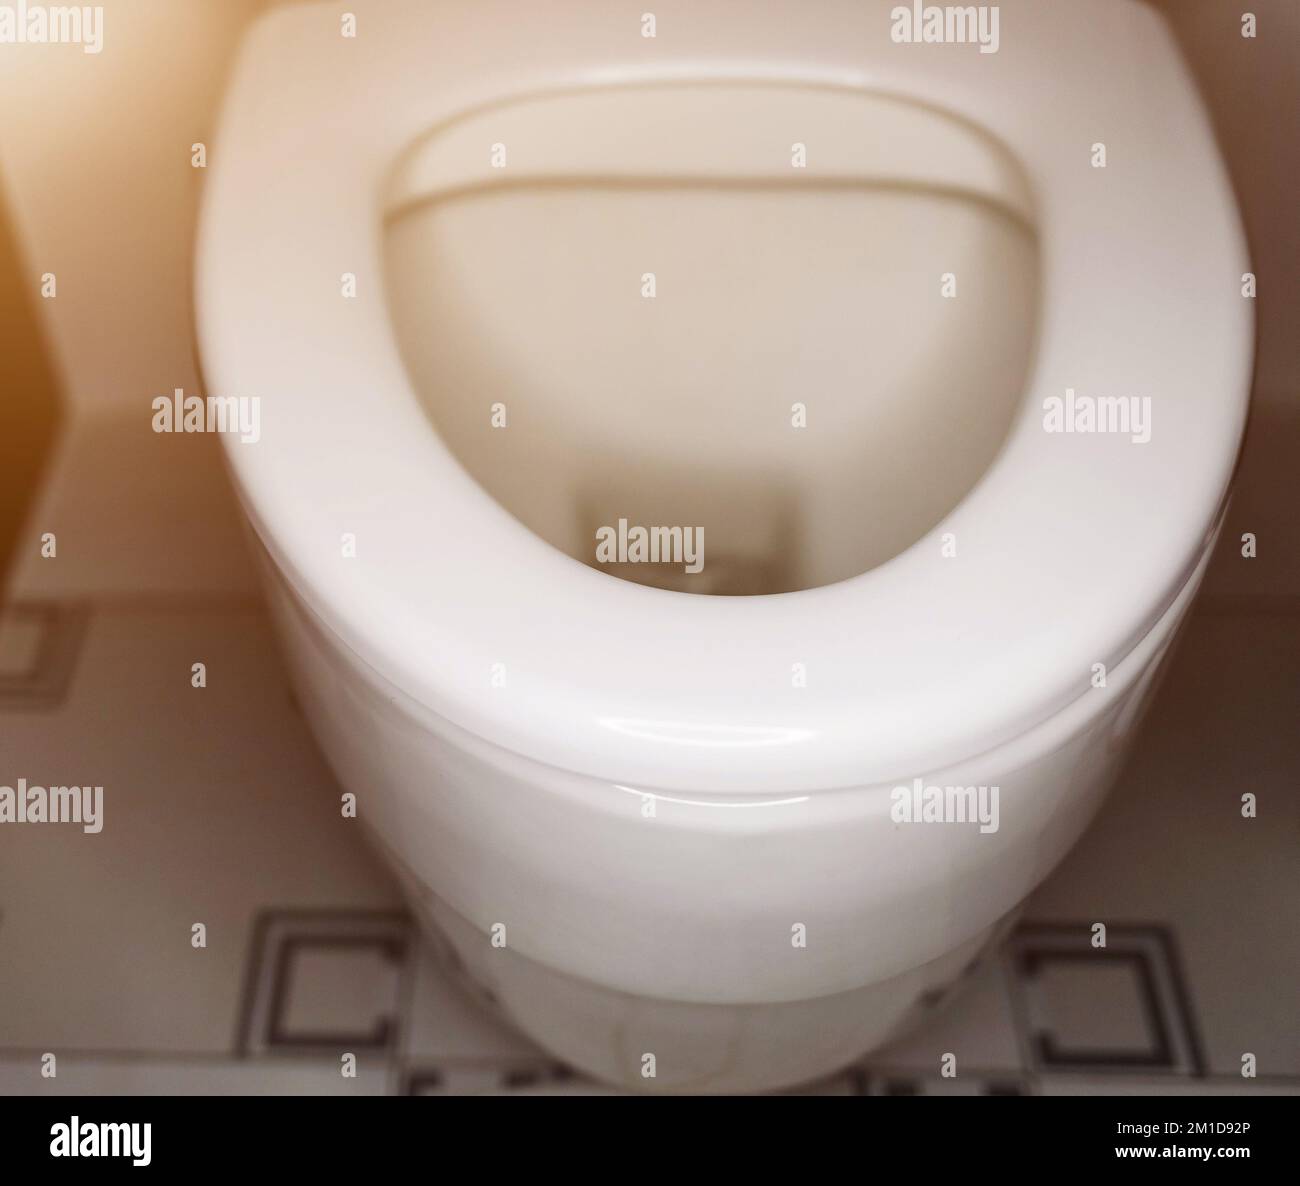 A clean white toilet bowl inside a bathroom Stock Photo - Alamy